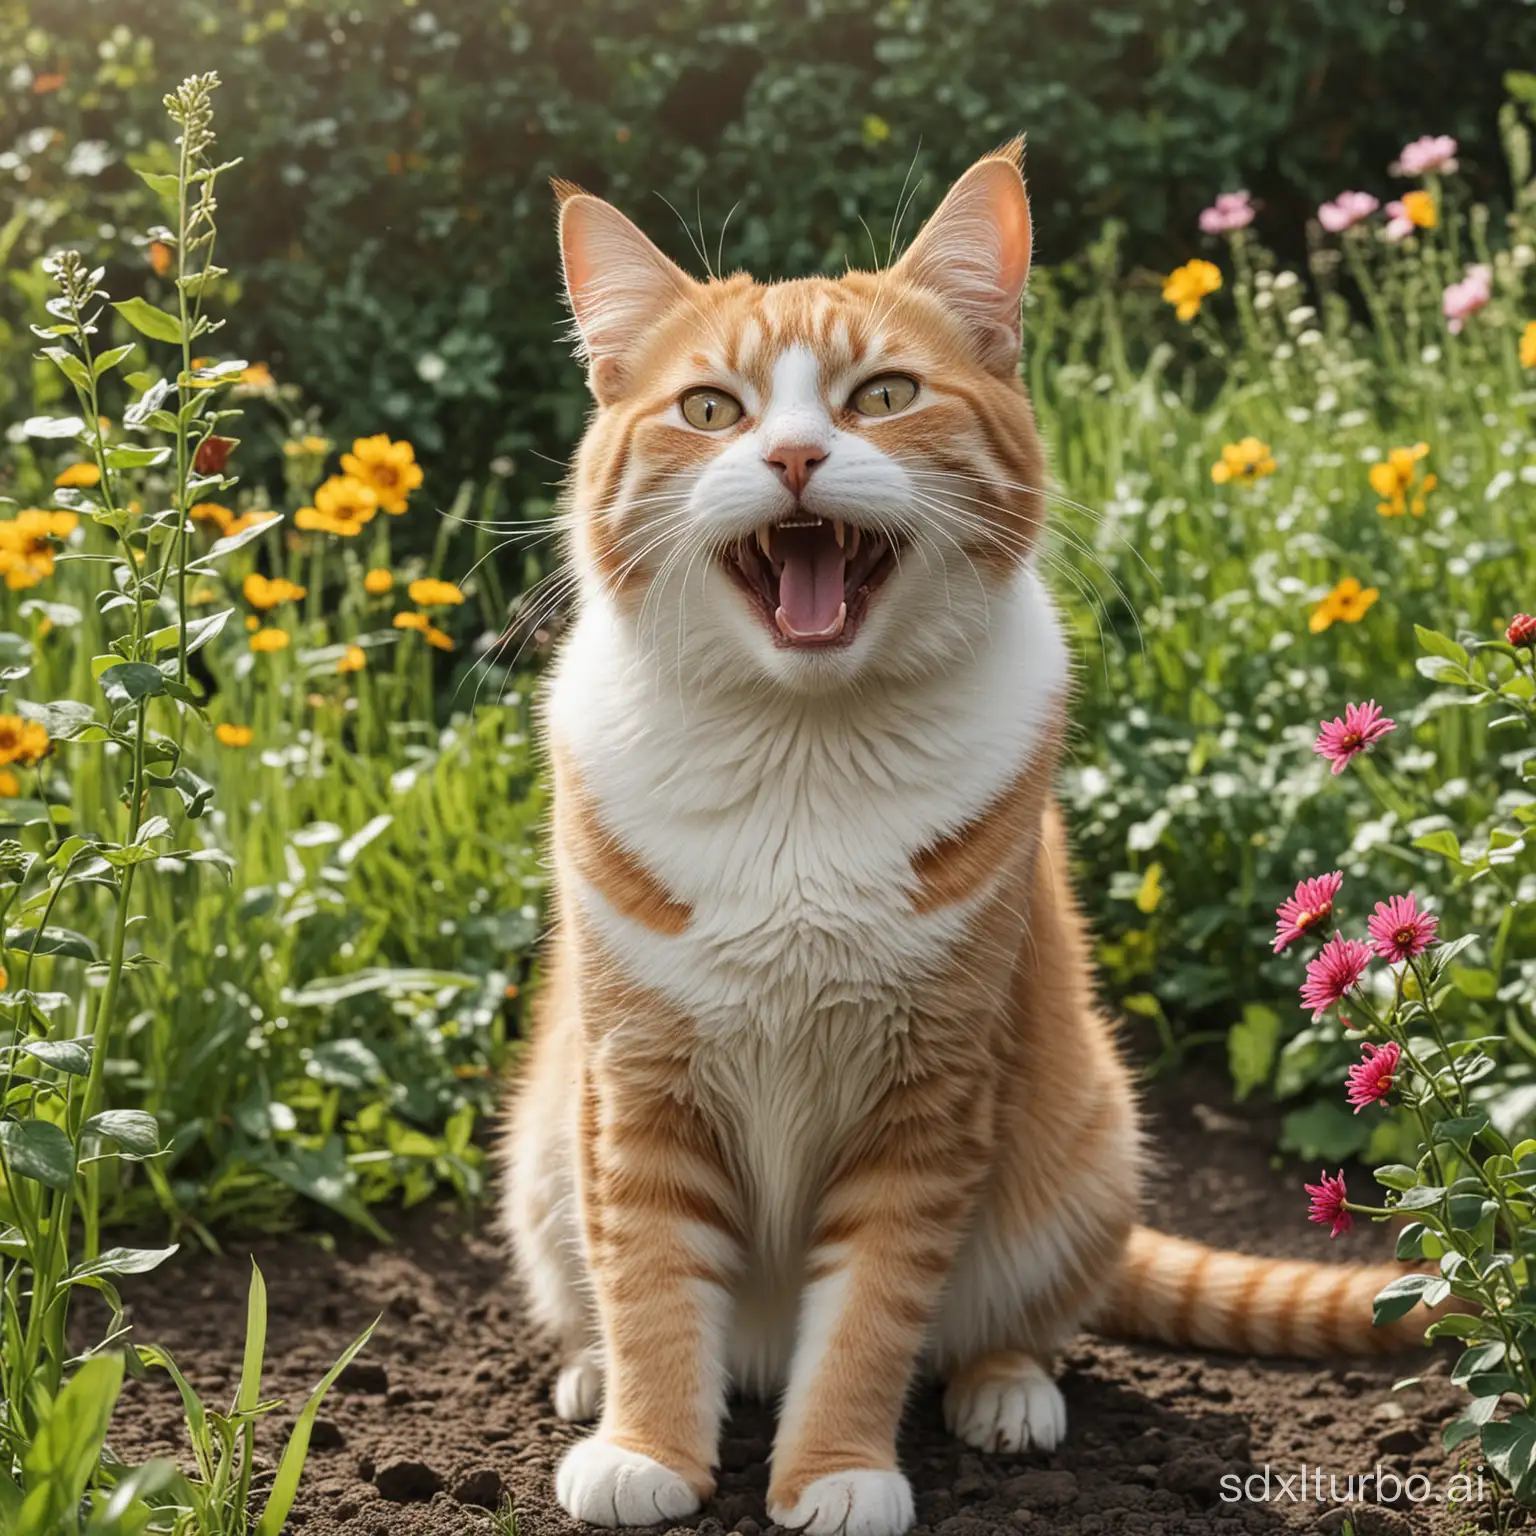 Joyful-Cat-Enjoying-Sunny-Day-in-Garden